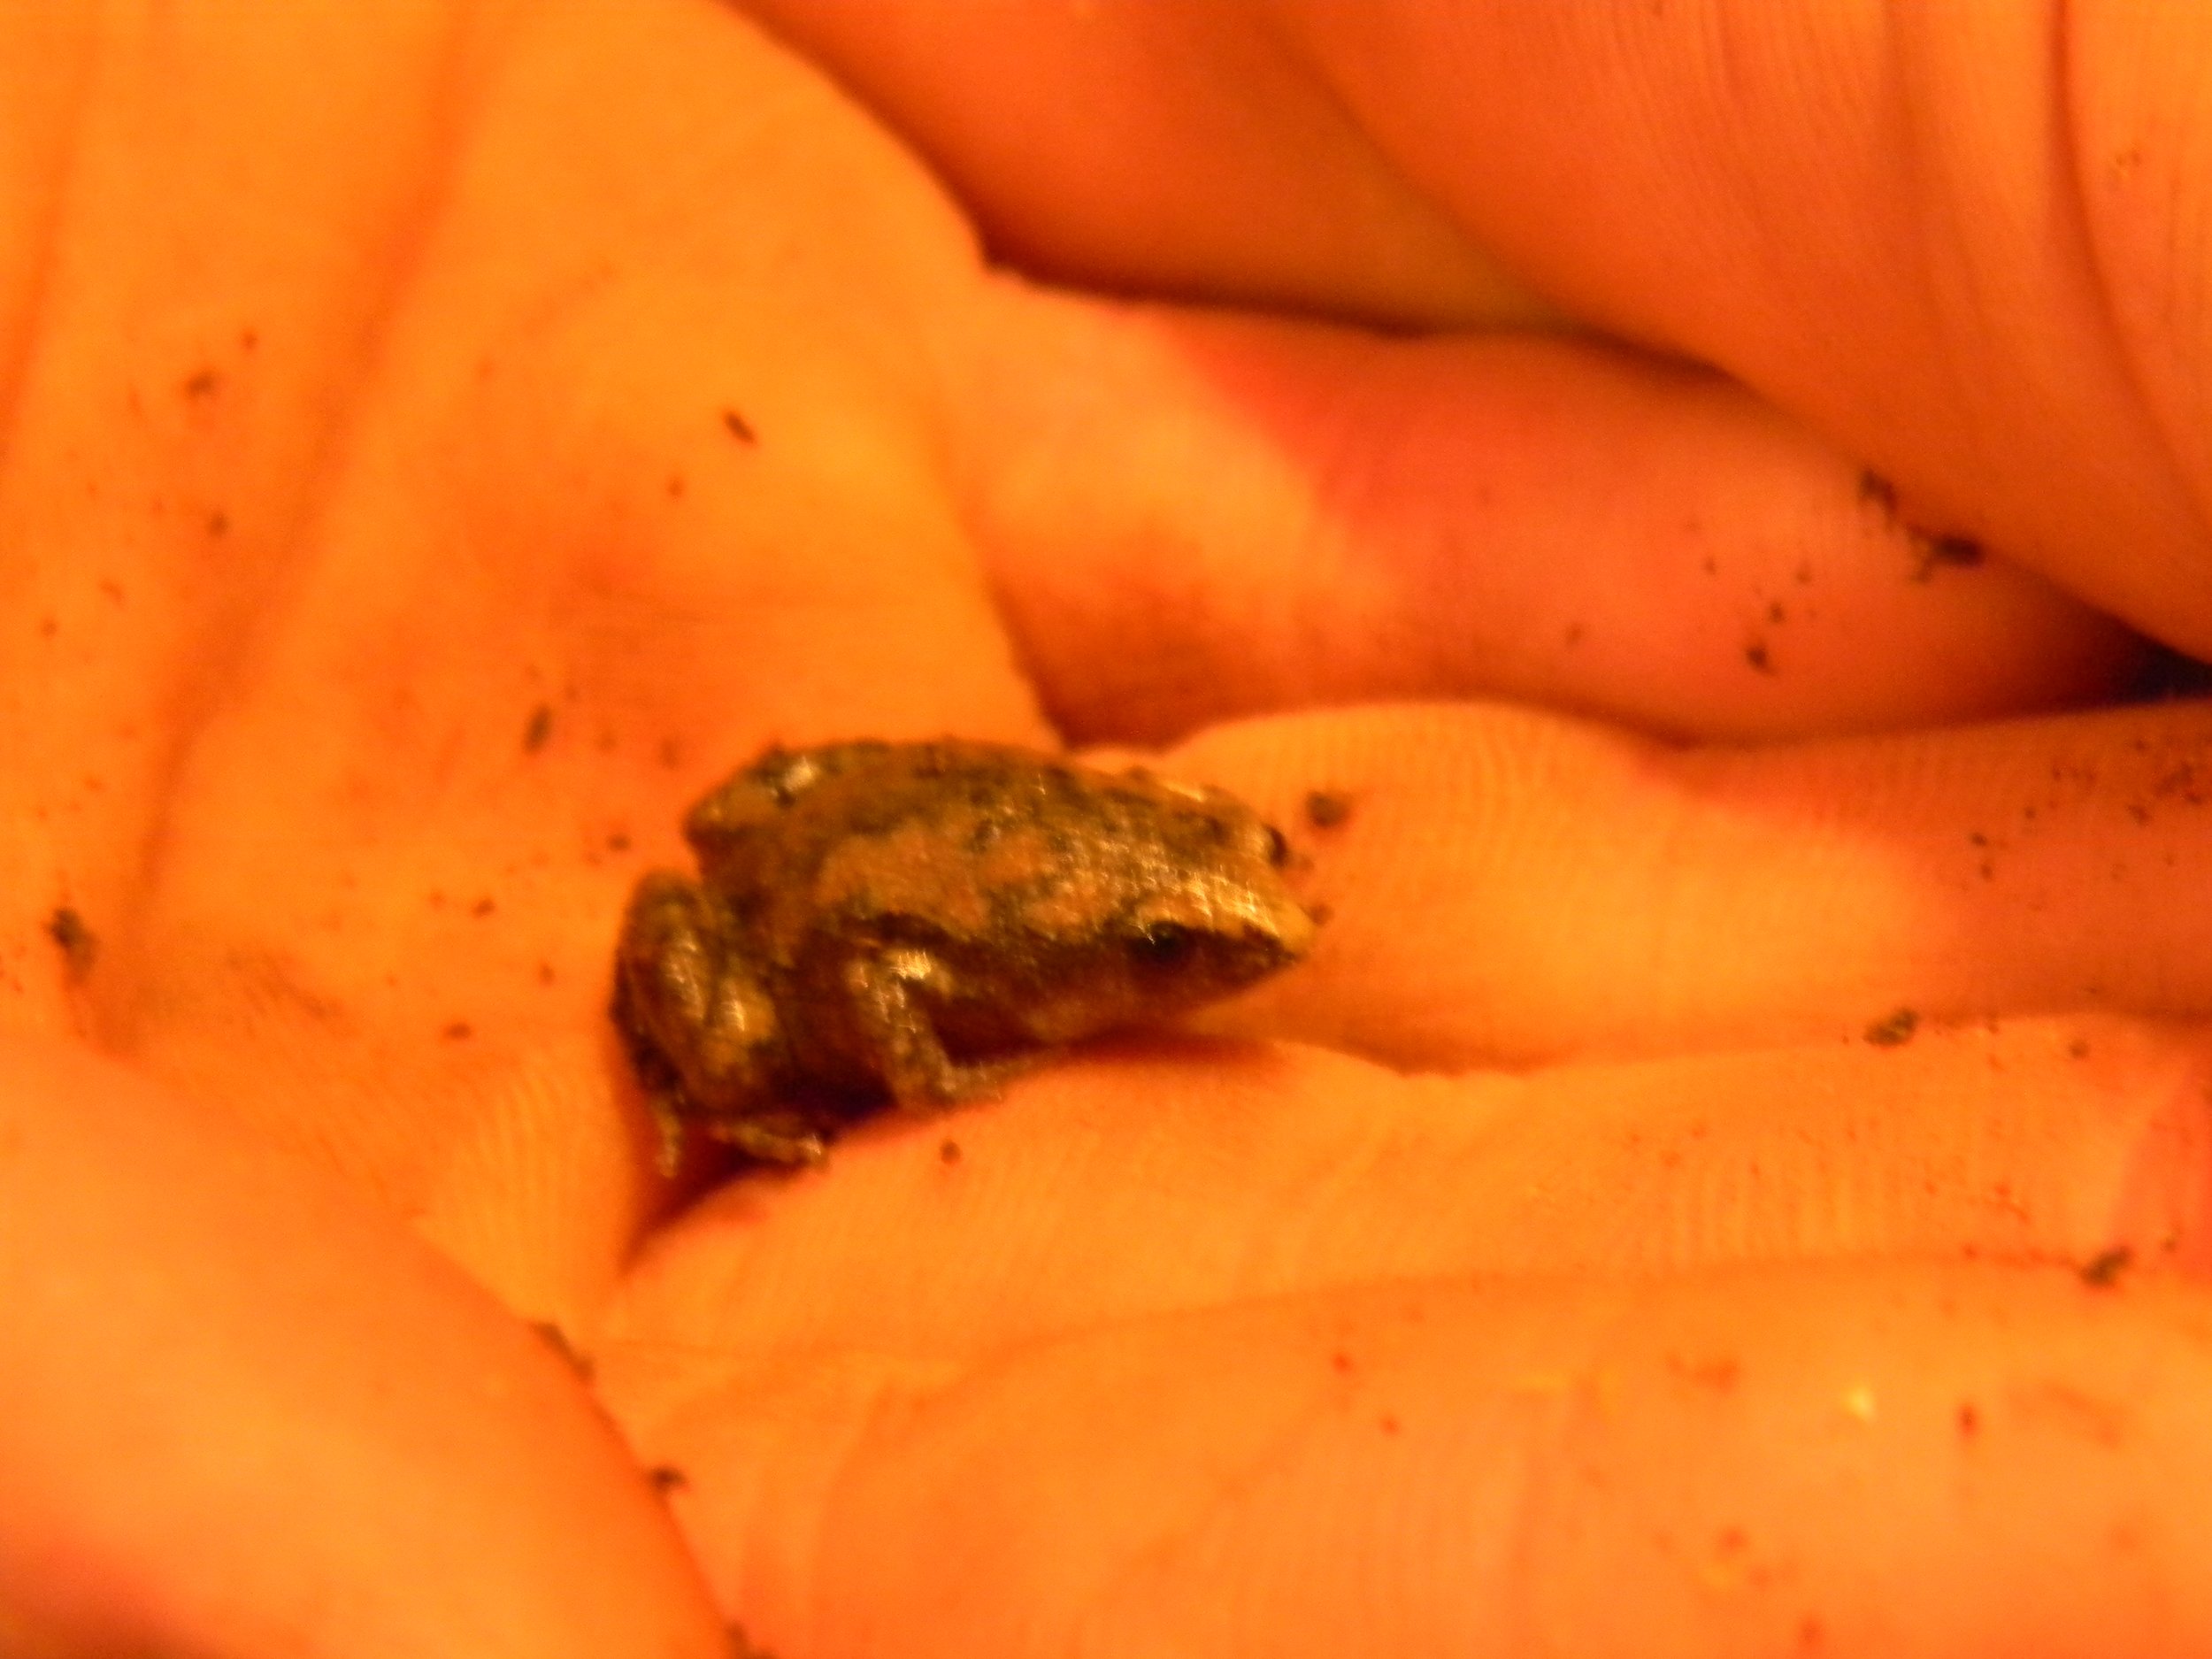 Eastern Narrowmouth Toad (Gastrophryne carolinensis)